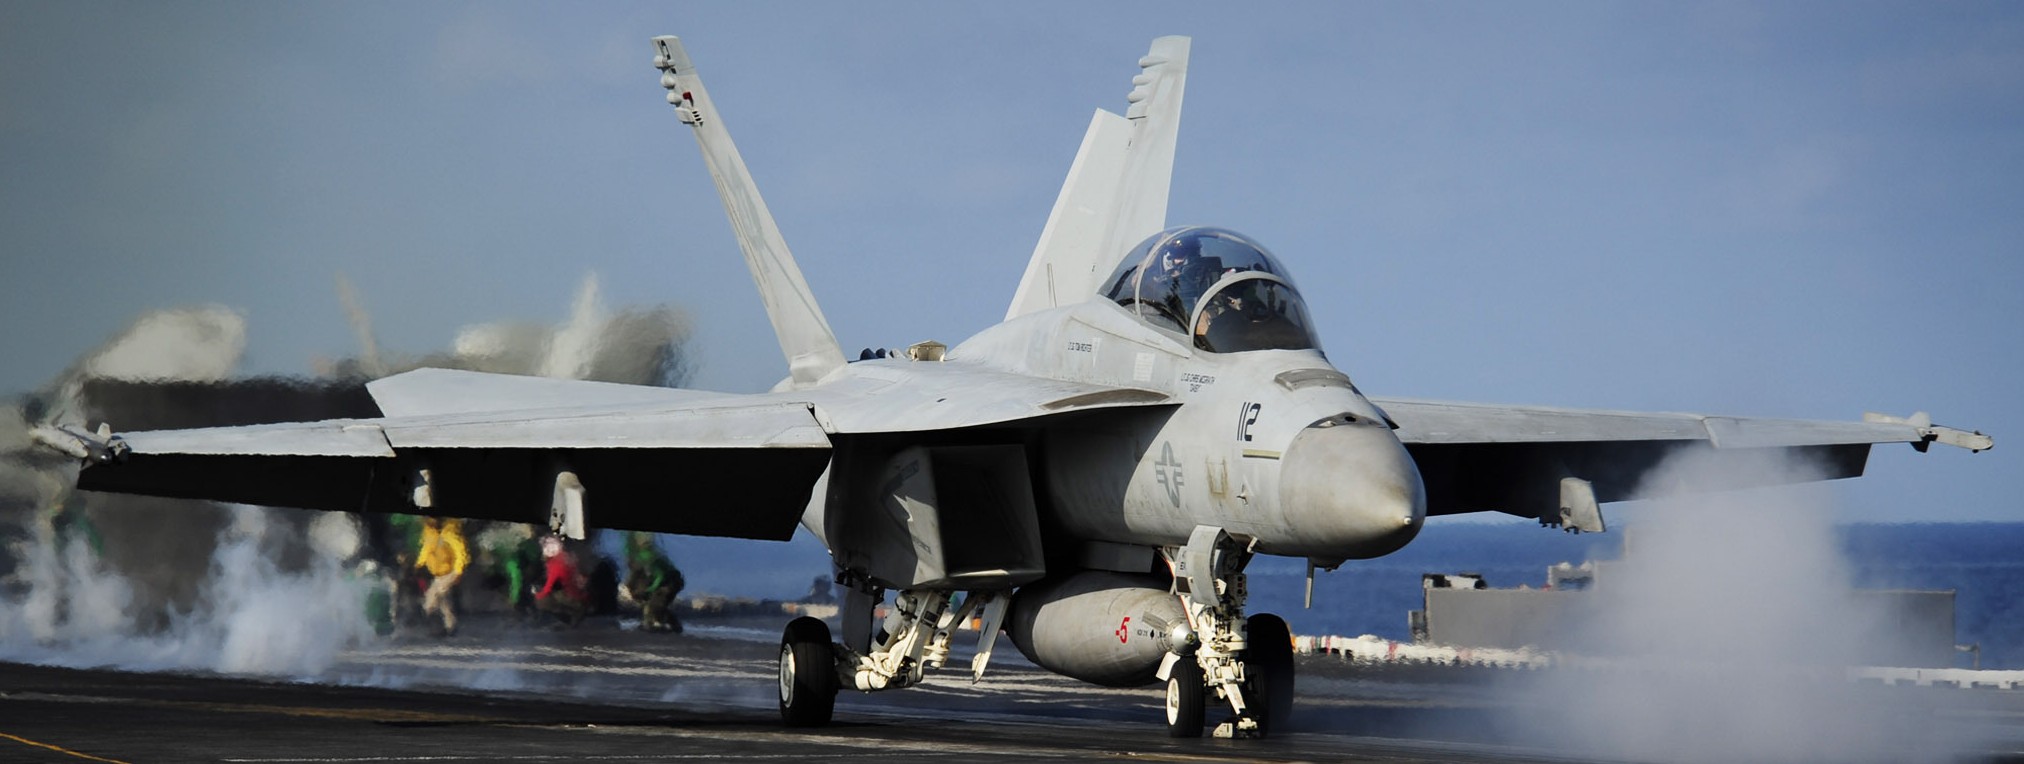 vfa-41 black aces strike fighter squadron f/a-18f super hornet cvw-9 cvn-70 uss john c. stennis us navy 16